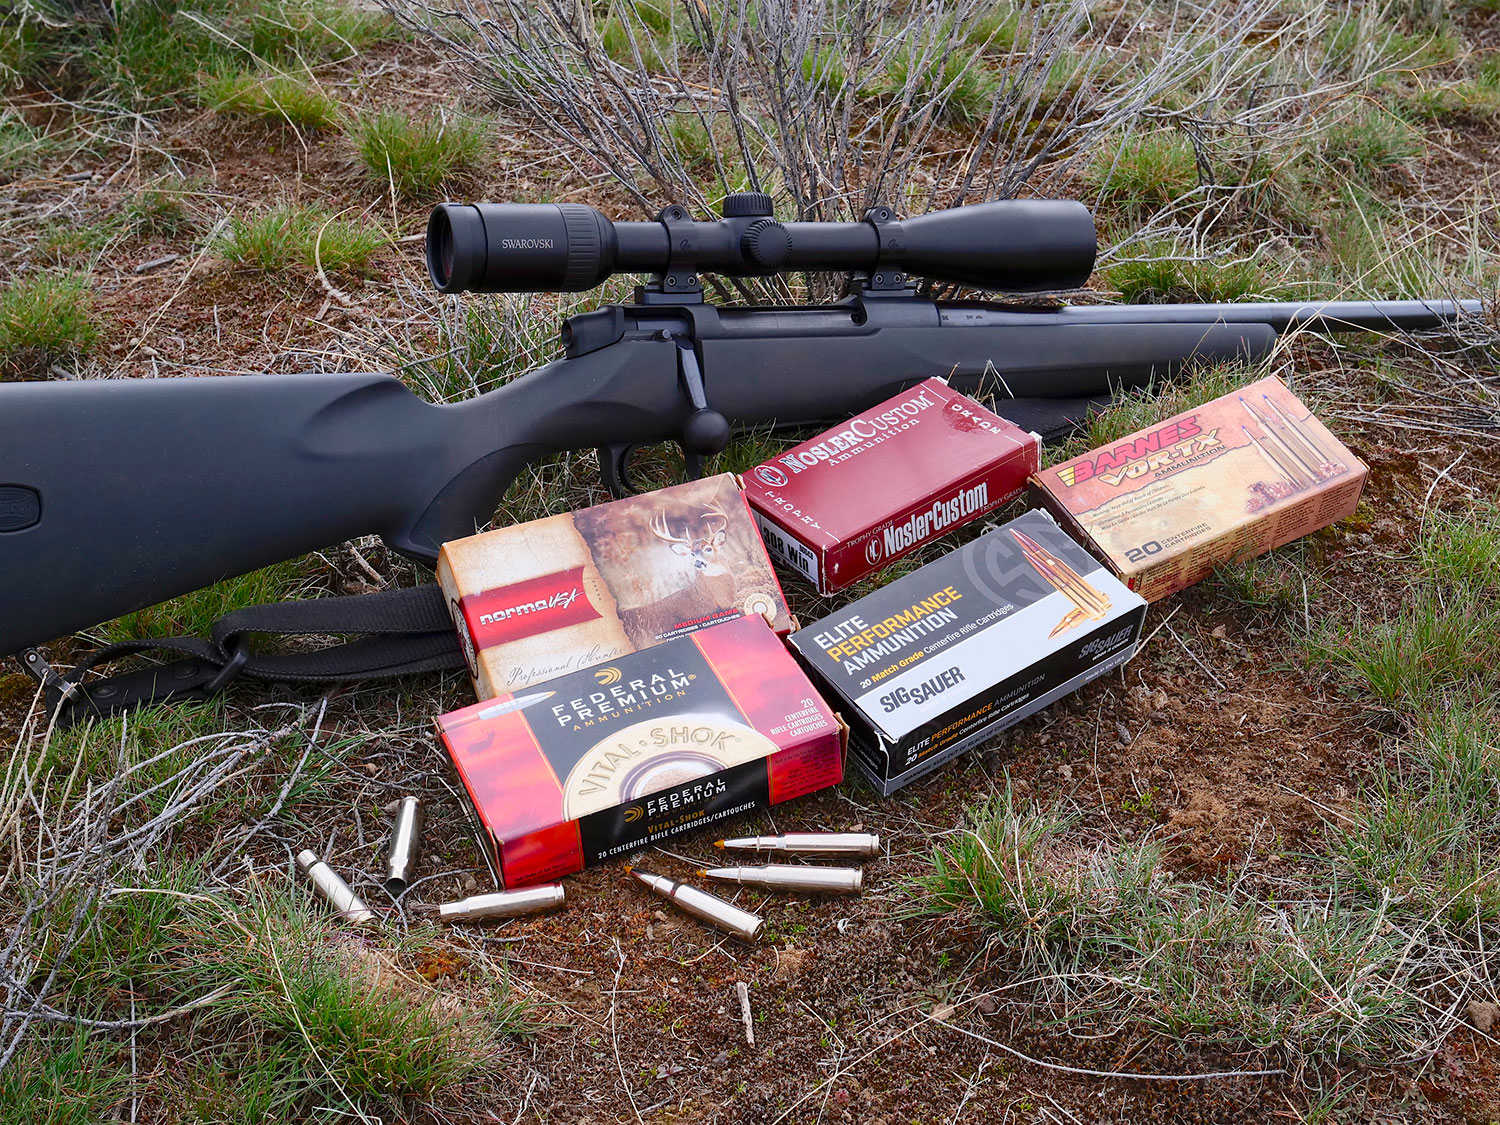 variety of ammunition on the gorund next to rifle